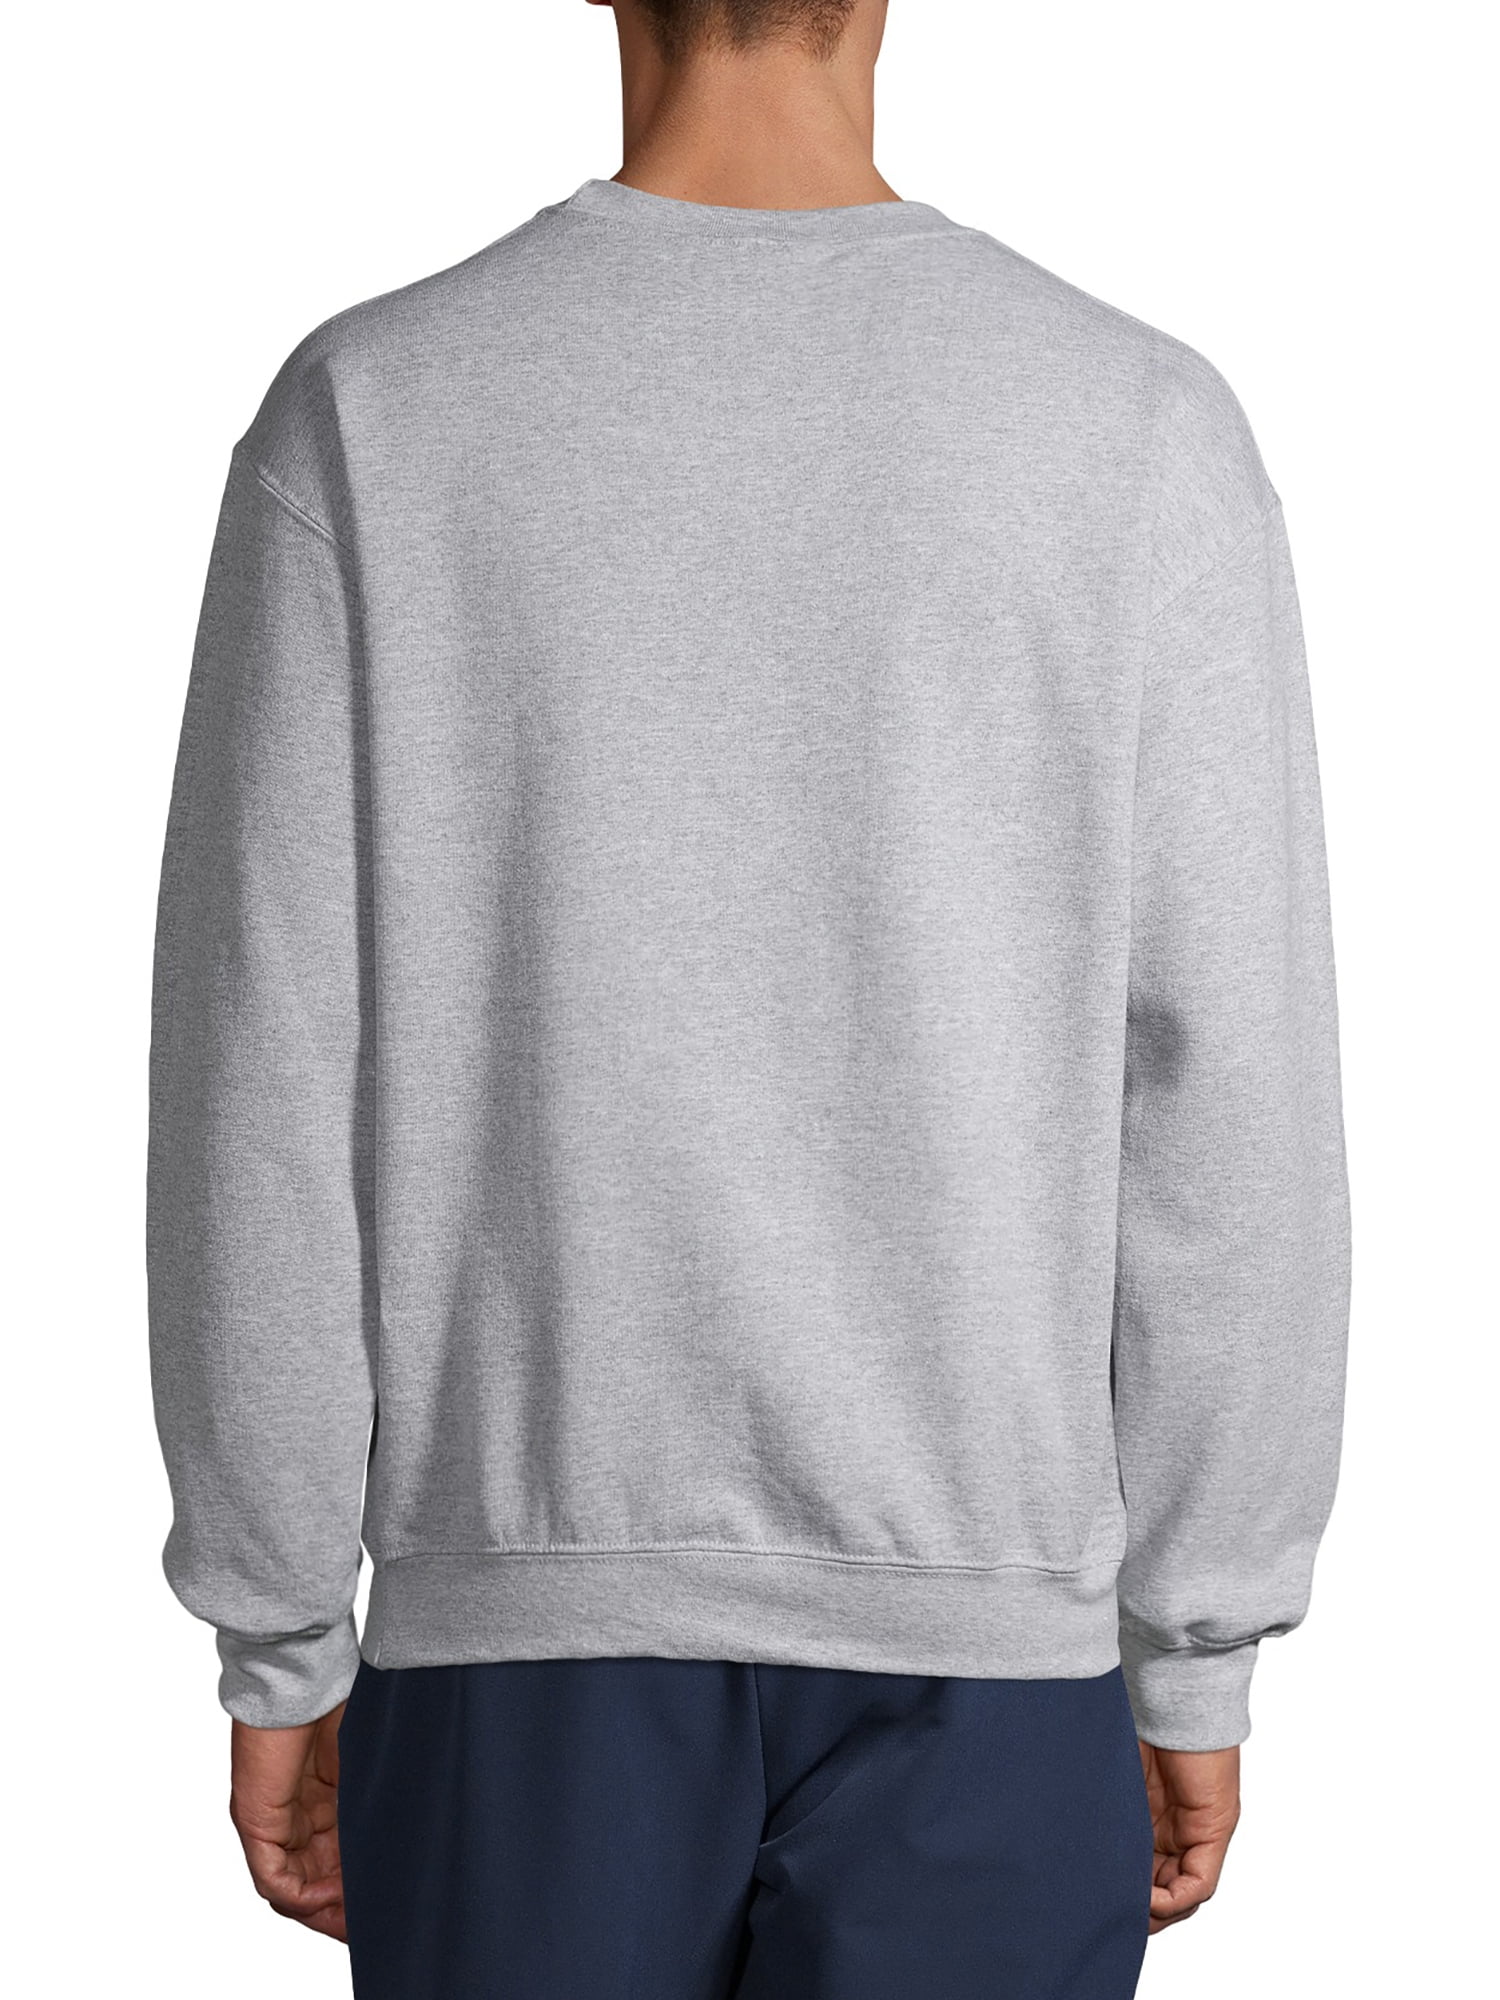 Gray L MEN FASHION Jumpers & Sweatshirts Sports Brooklin sweatshirt discount 71% 